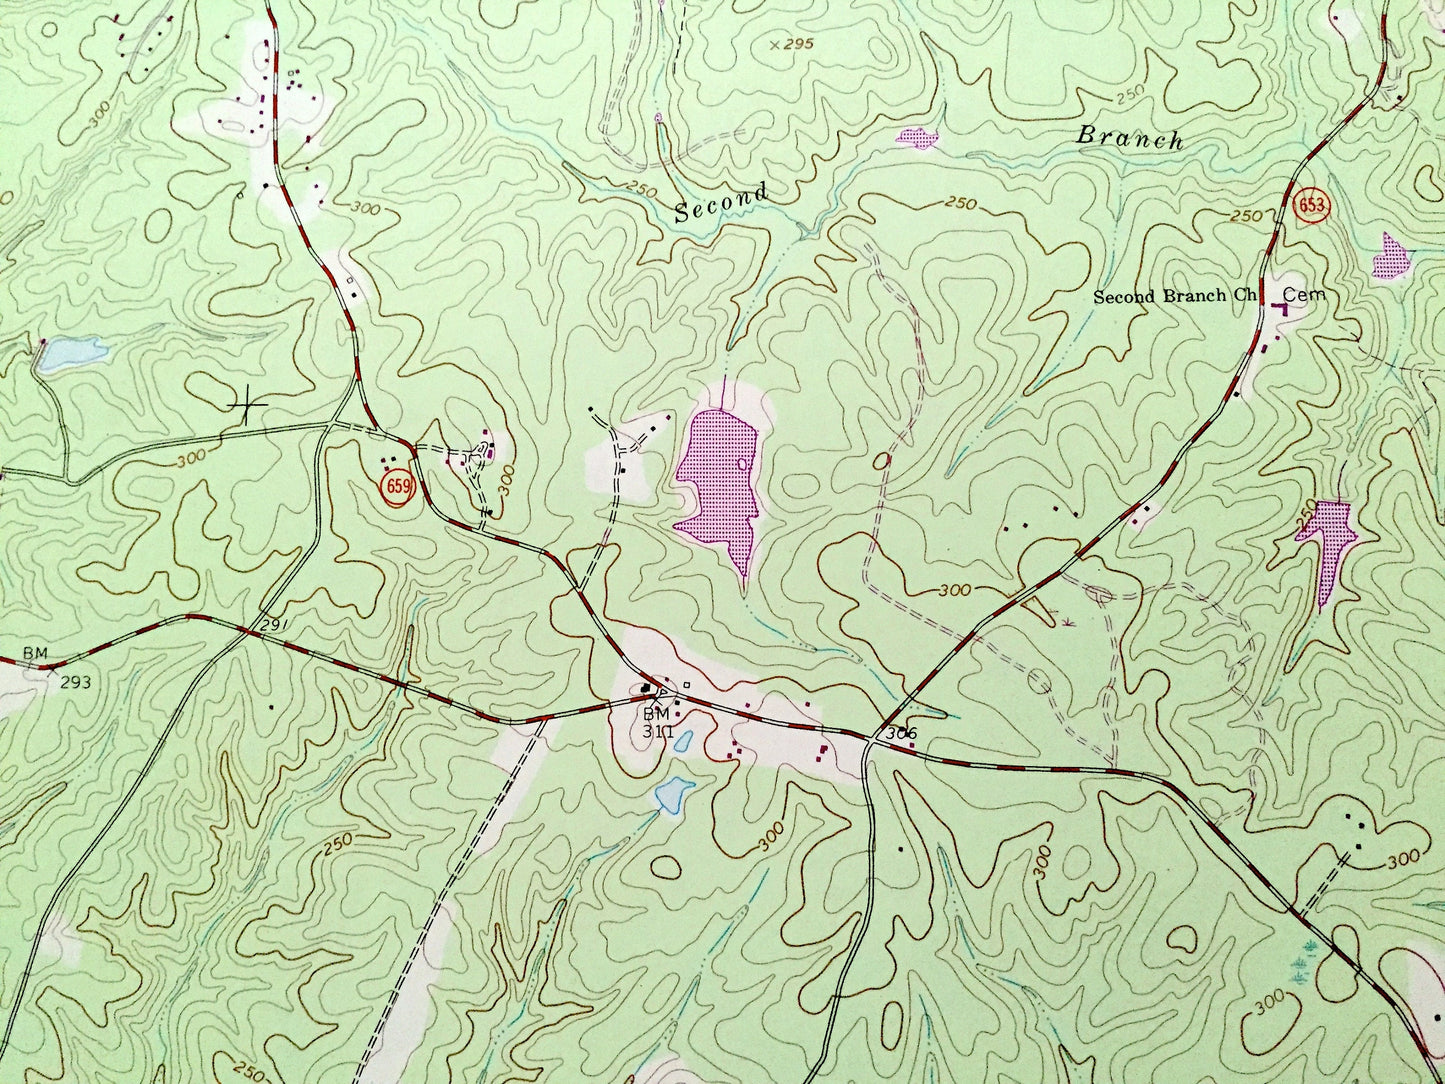 Antique Winterpock, Virginia 1963 US Geological Survey Topographic Map – Chesterfield, Amelia County, Lake Chesdin, Appomattox River, VA